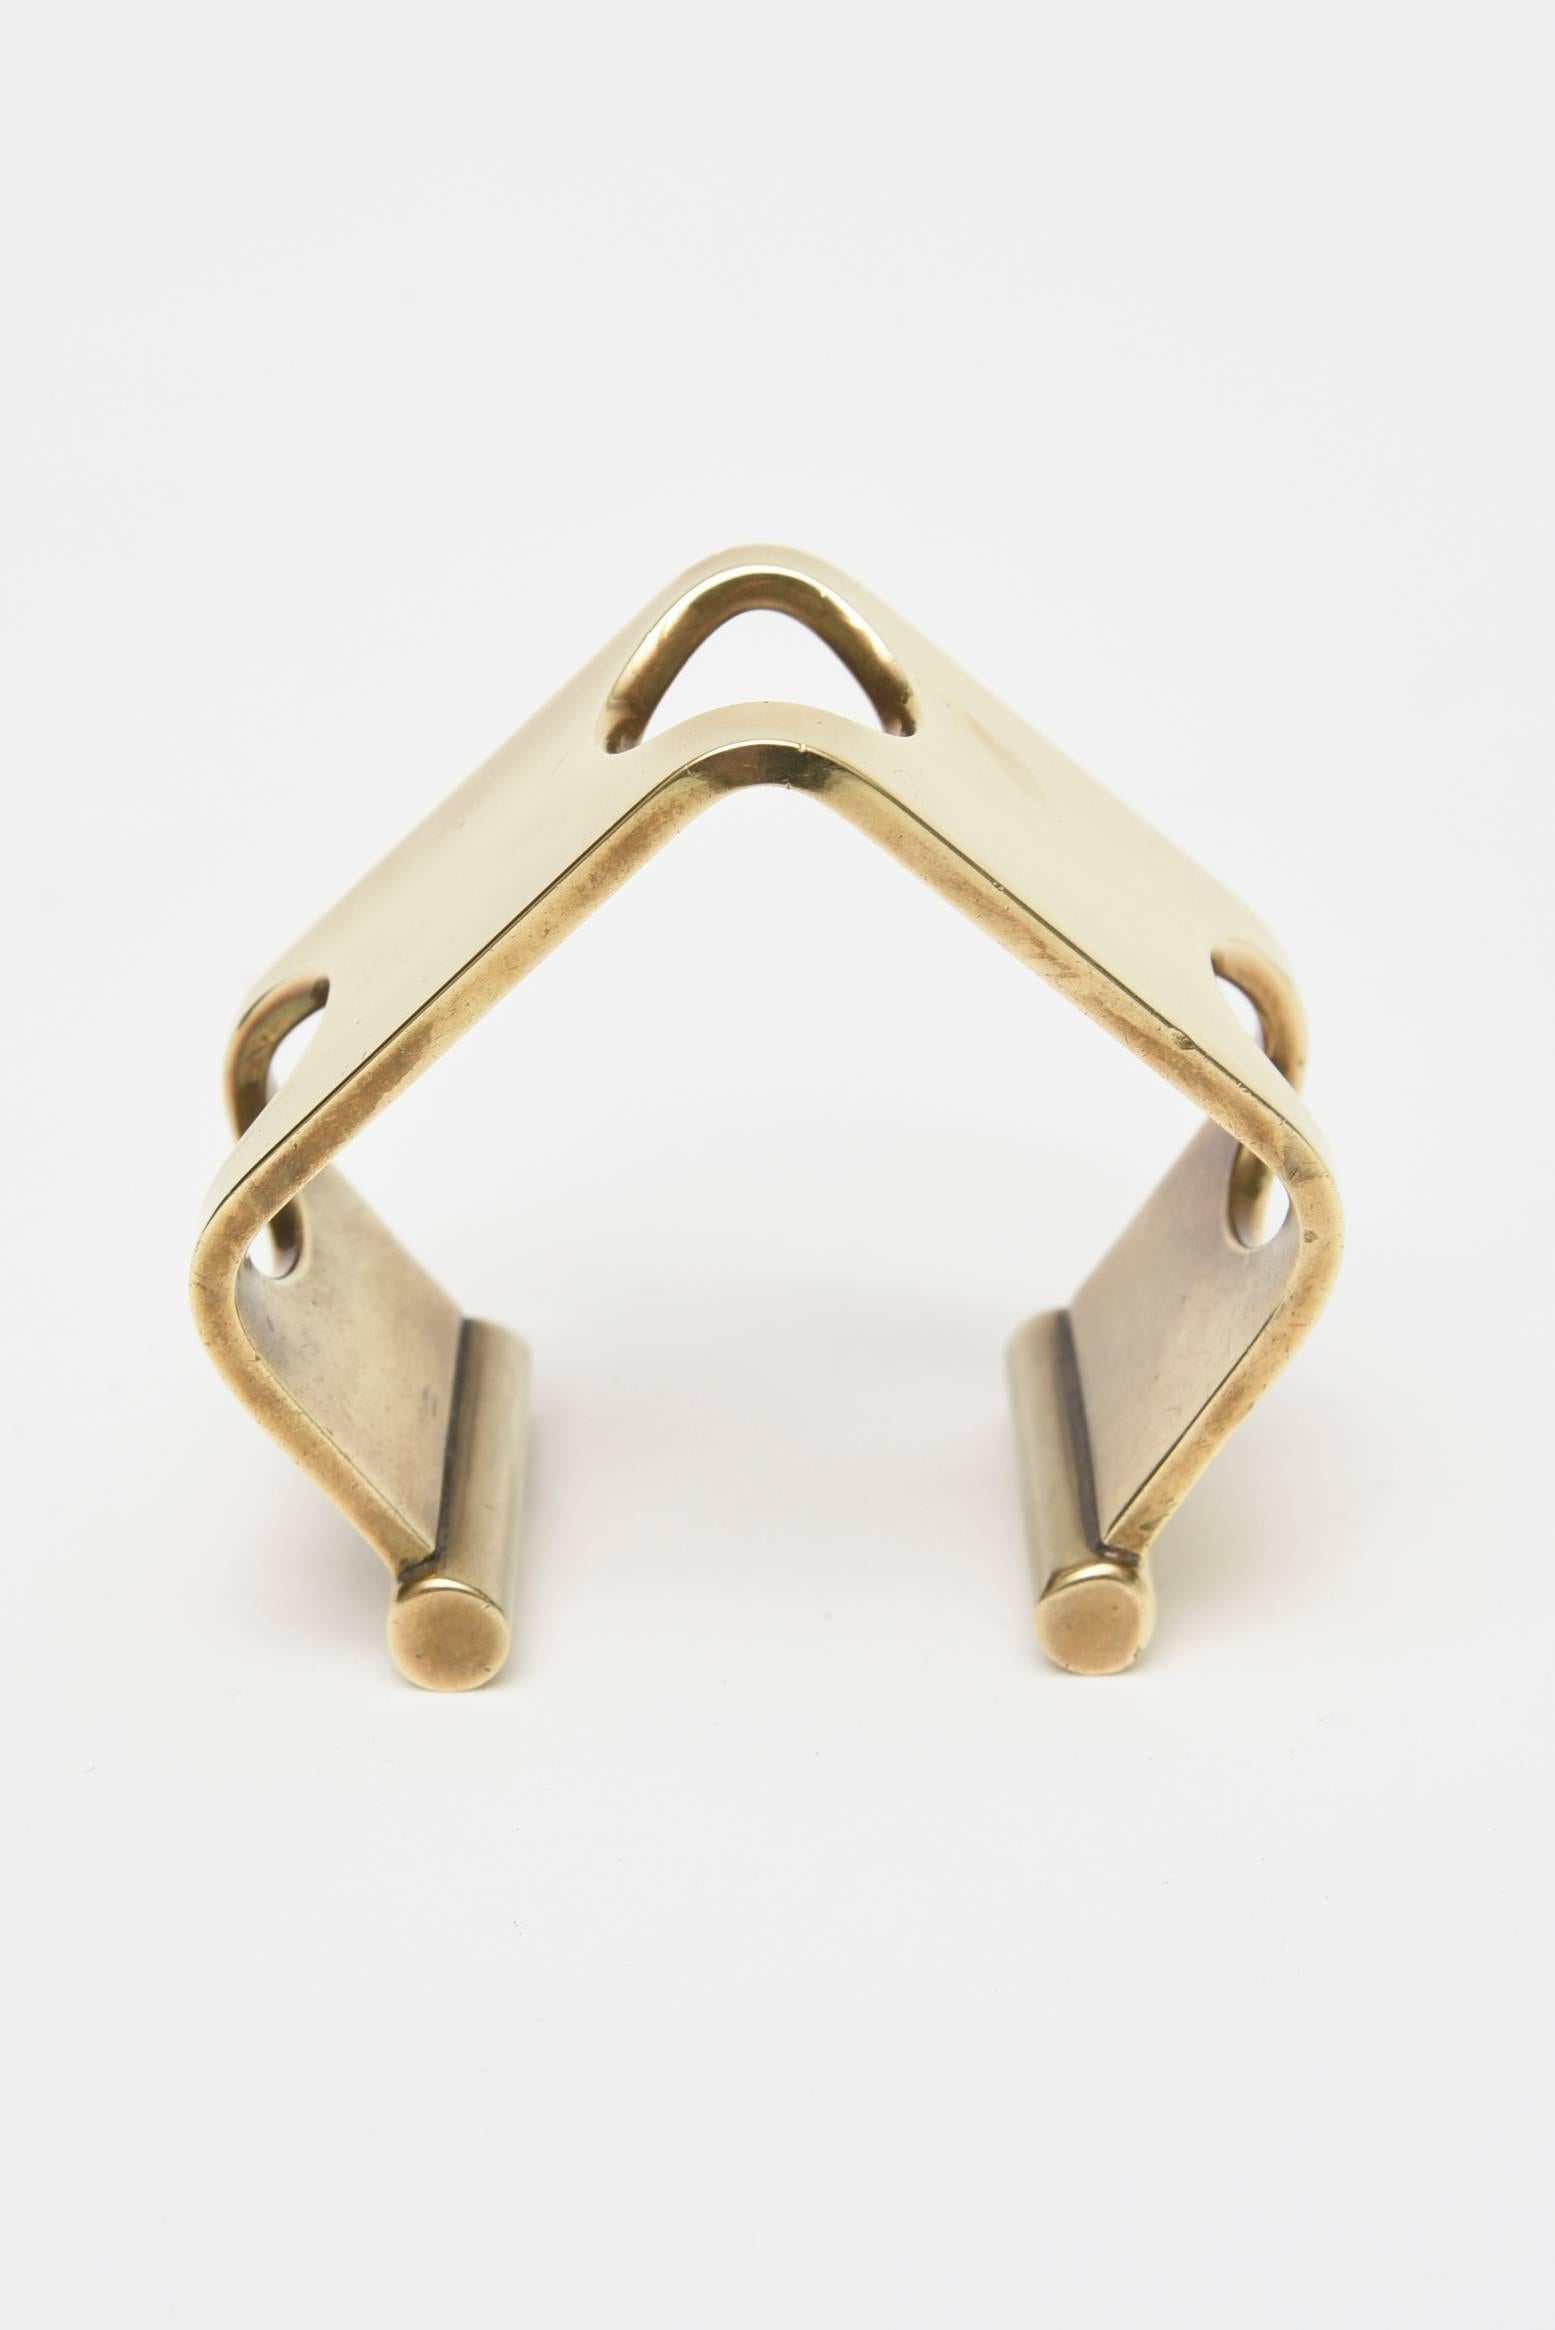 Studio Hand Made Vintage Brass Sculptural Cut Out Cuff Bracelet  3